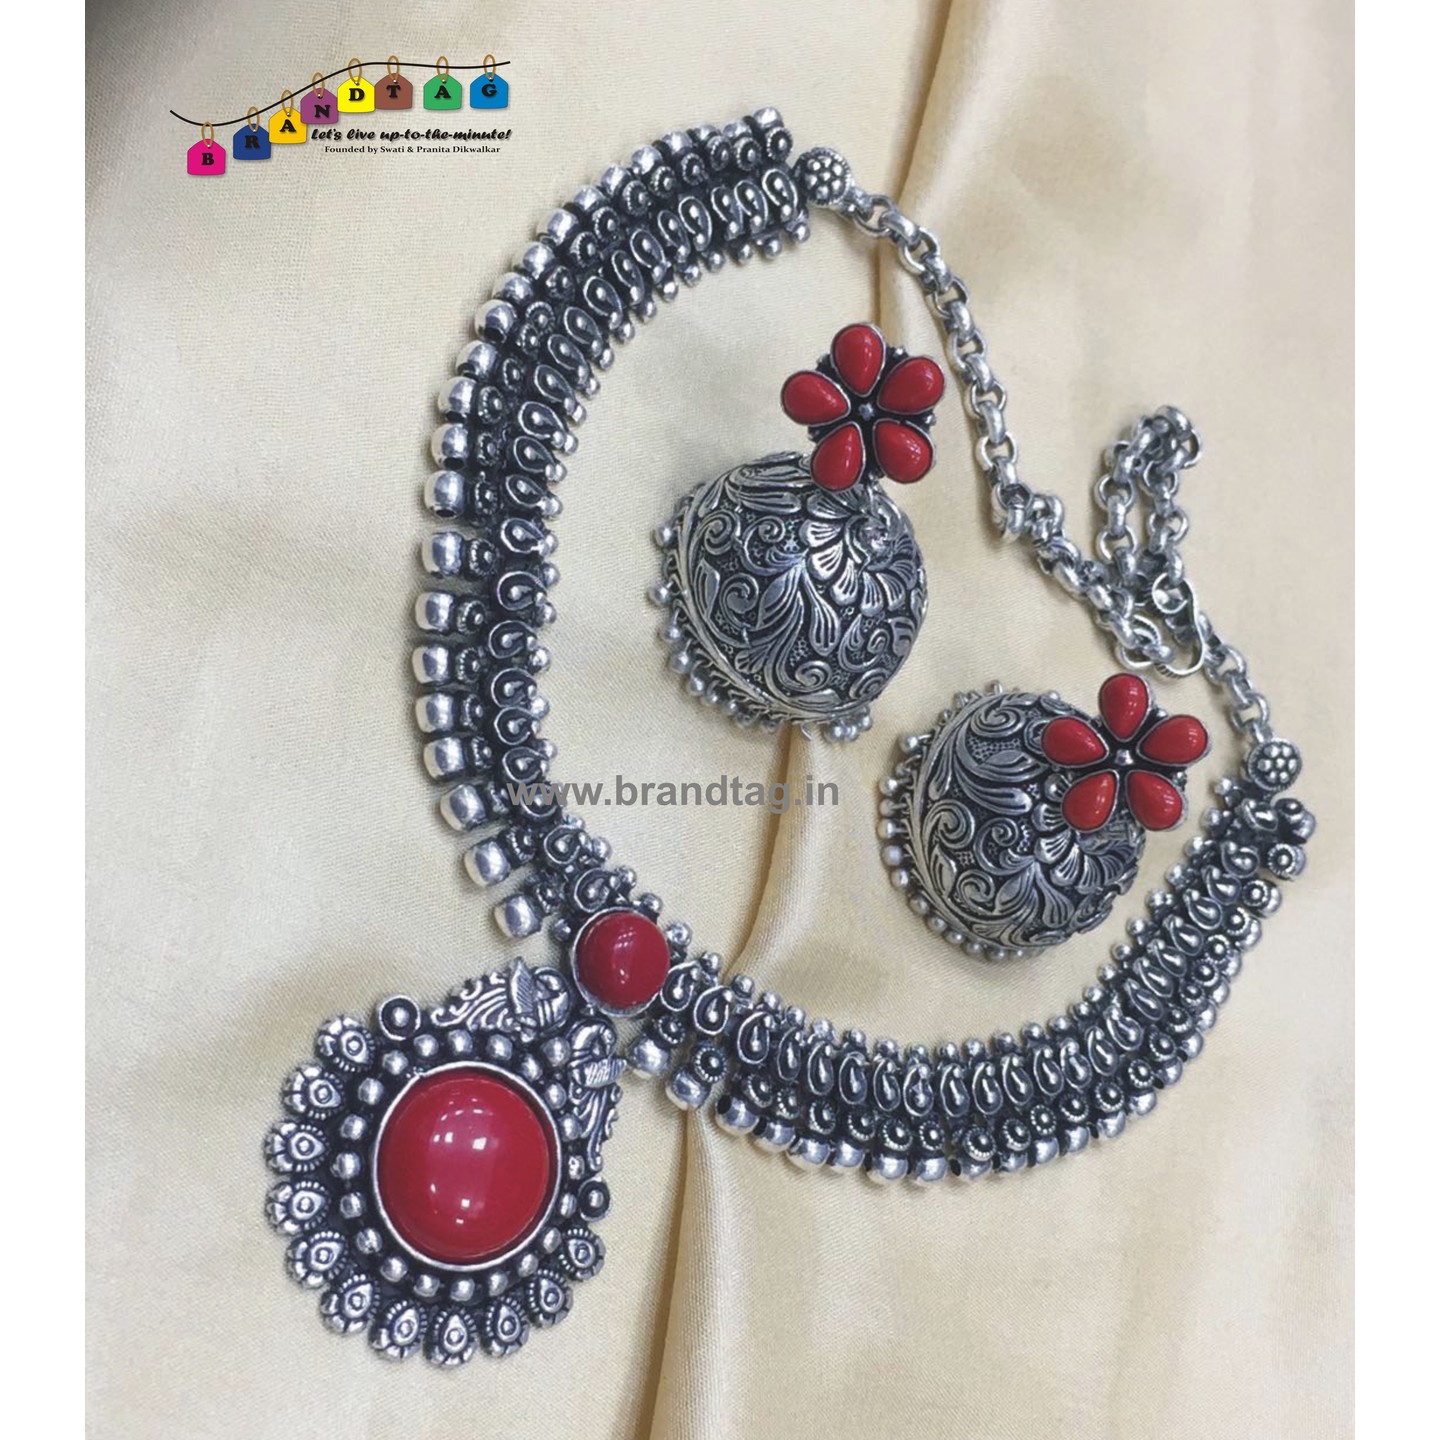 Beautiful Oxidized Necklace set!